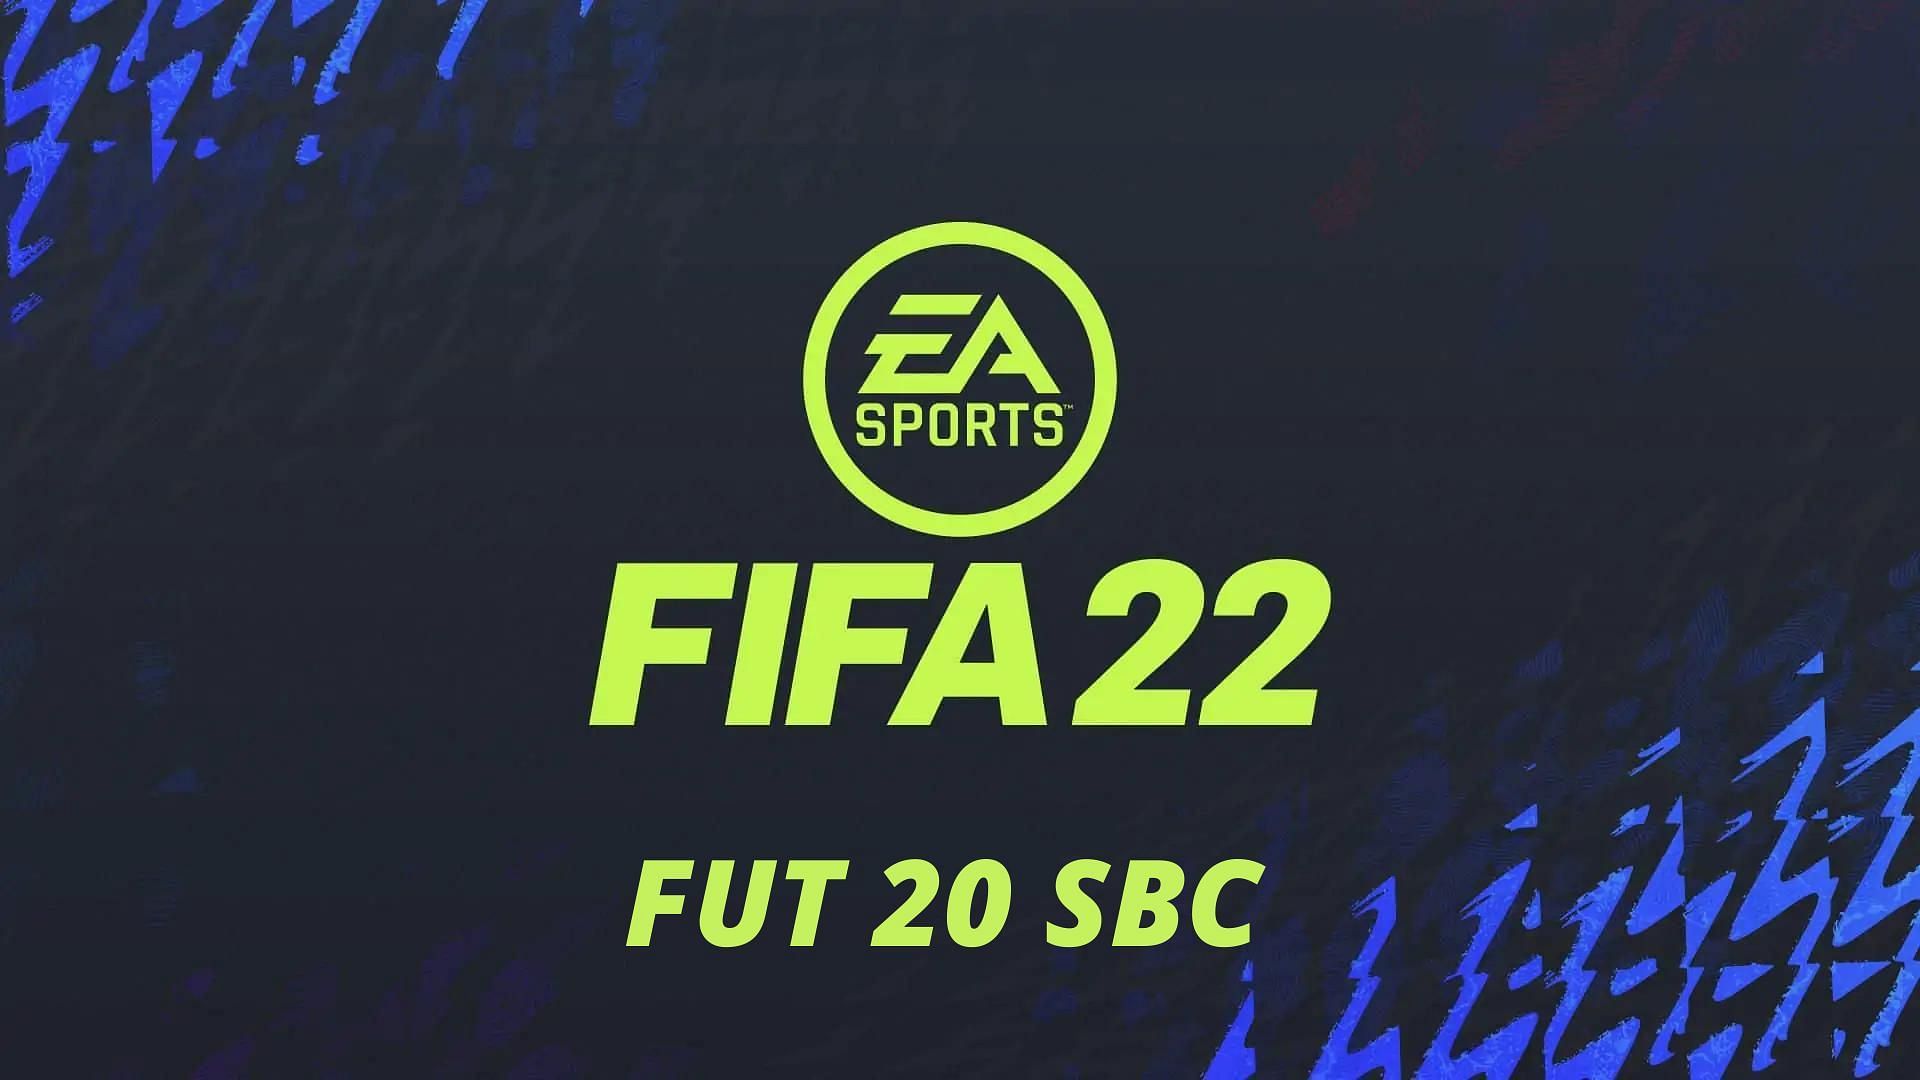 FUT 20 SBC is now live in FIFA 22 Ultimate Team (Image via Sportskeeda)